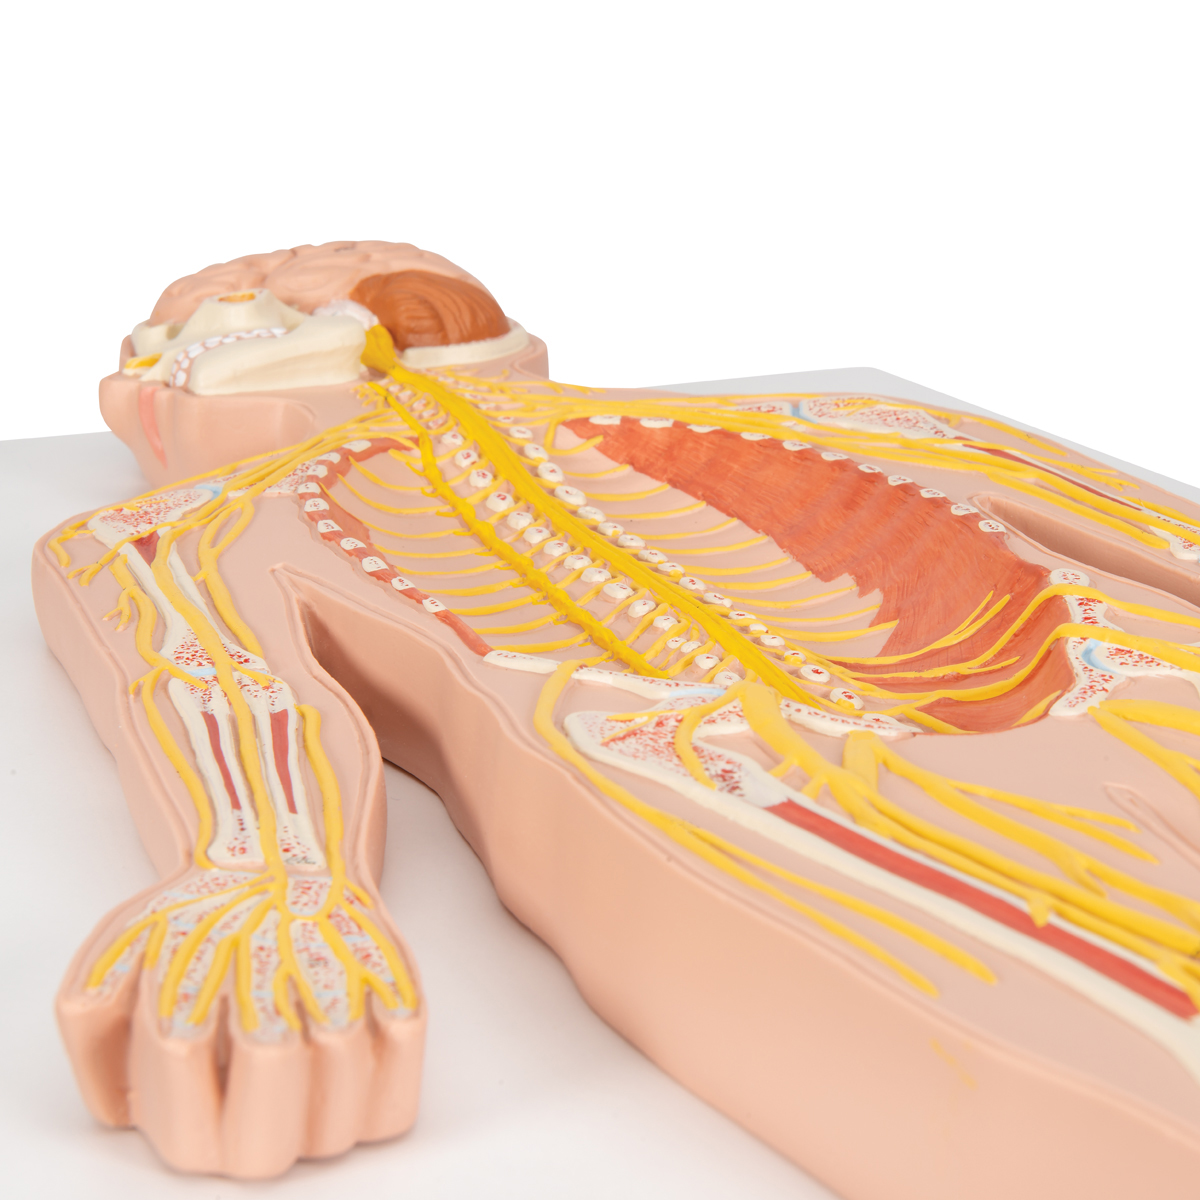 https://www.3bscientific.com/thumblibrary/C30/C30_06_1200_1200_Human-Nervous-System-Model-12-Life-Size-3B-Smart-Anatomy.jpg